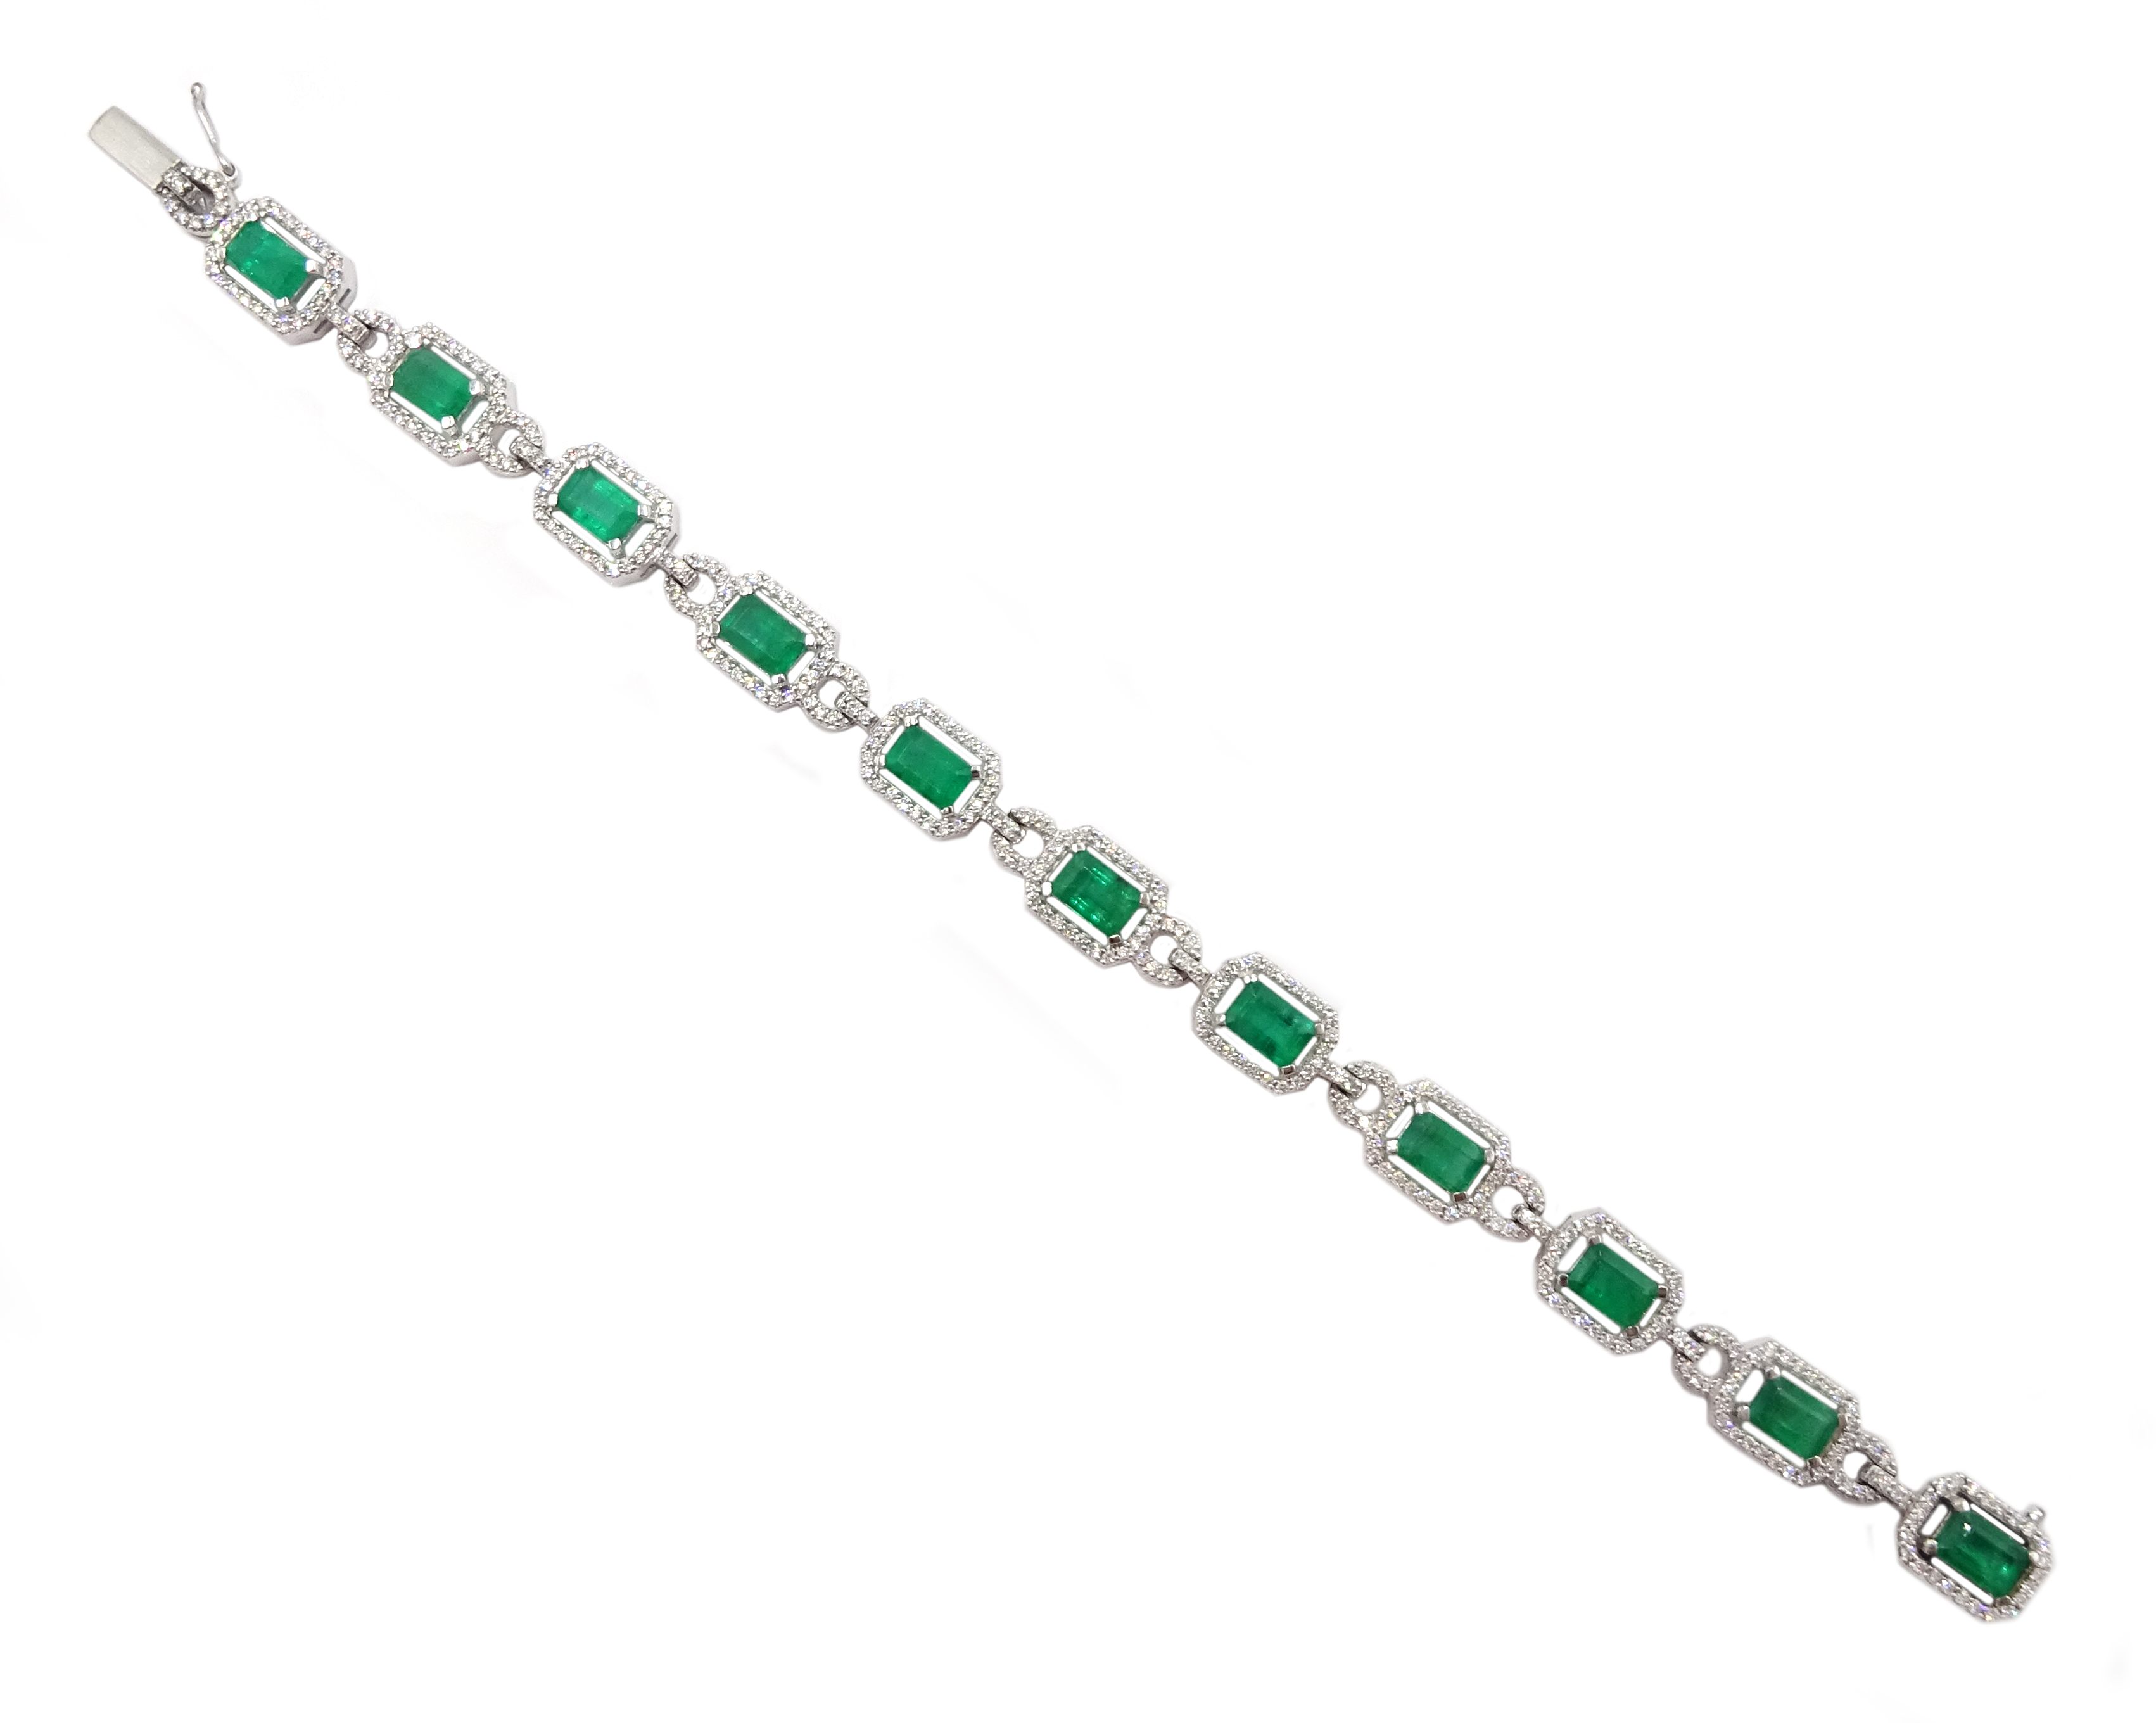 18ct white gold emerald cut emerald and round brilliant cut diamond bracelet, hallmarked, emerald t - Image 2 of 4